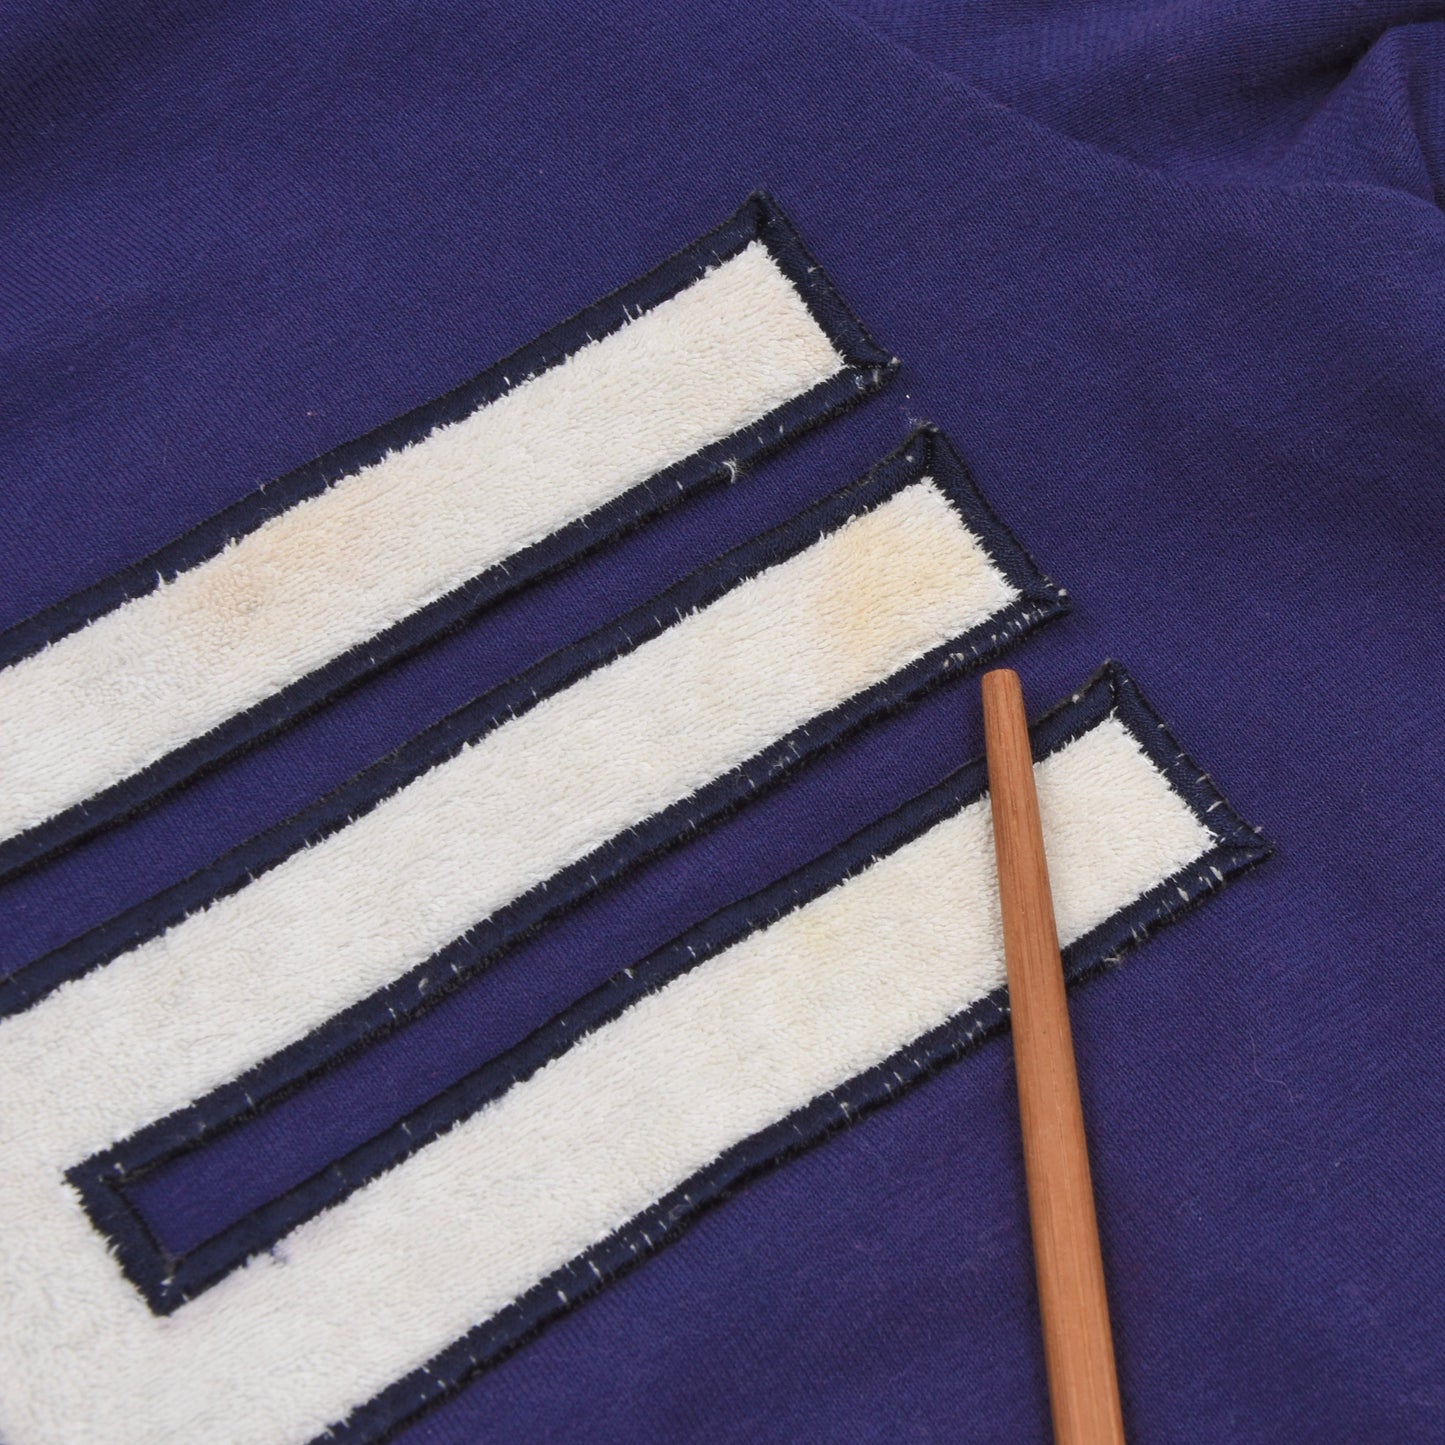 Etro Milano Cotton Cardigan Sweater Size L - Purple